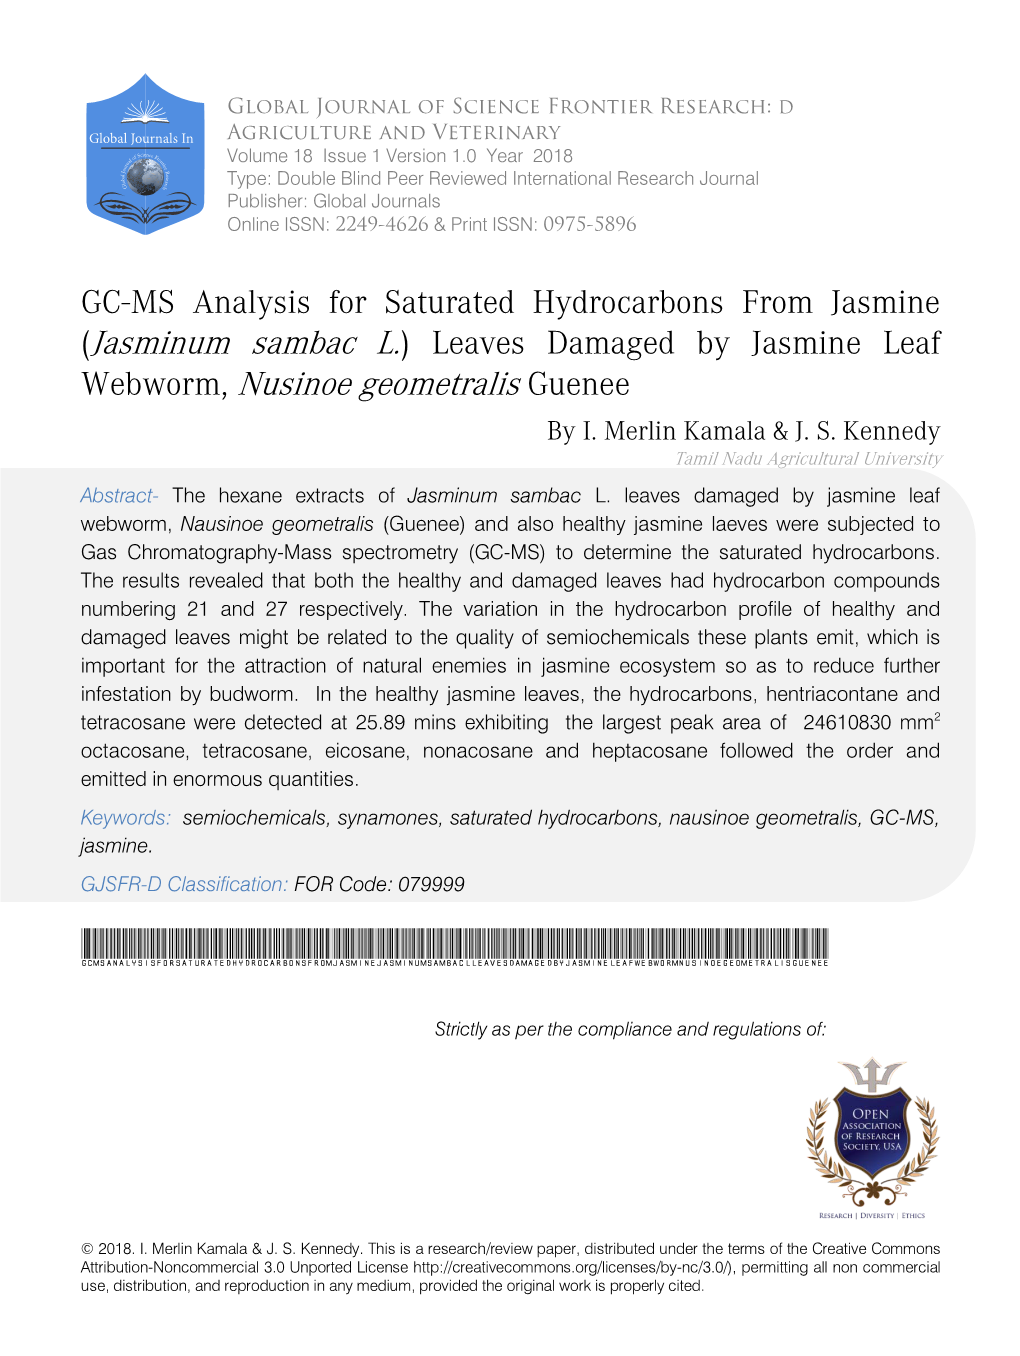 GC-MS Analysis for Saturated Hydrocarbons from Jasmine (Jasminum Sambac L.) Leaves Damaged by Jasmine Leaf Webworm, Nusinoe Geometralis Guenee by I